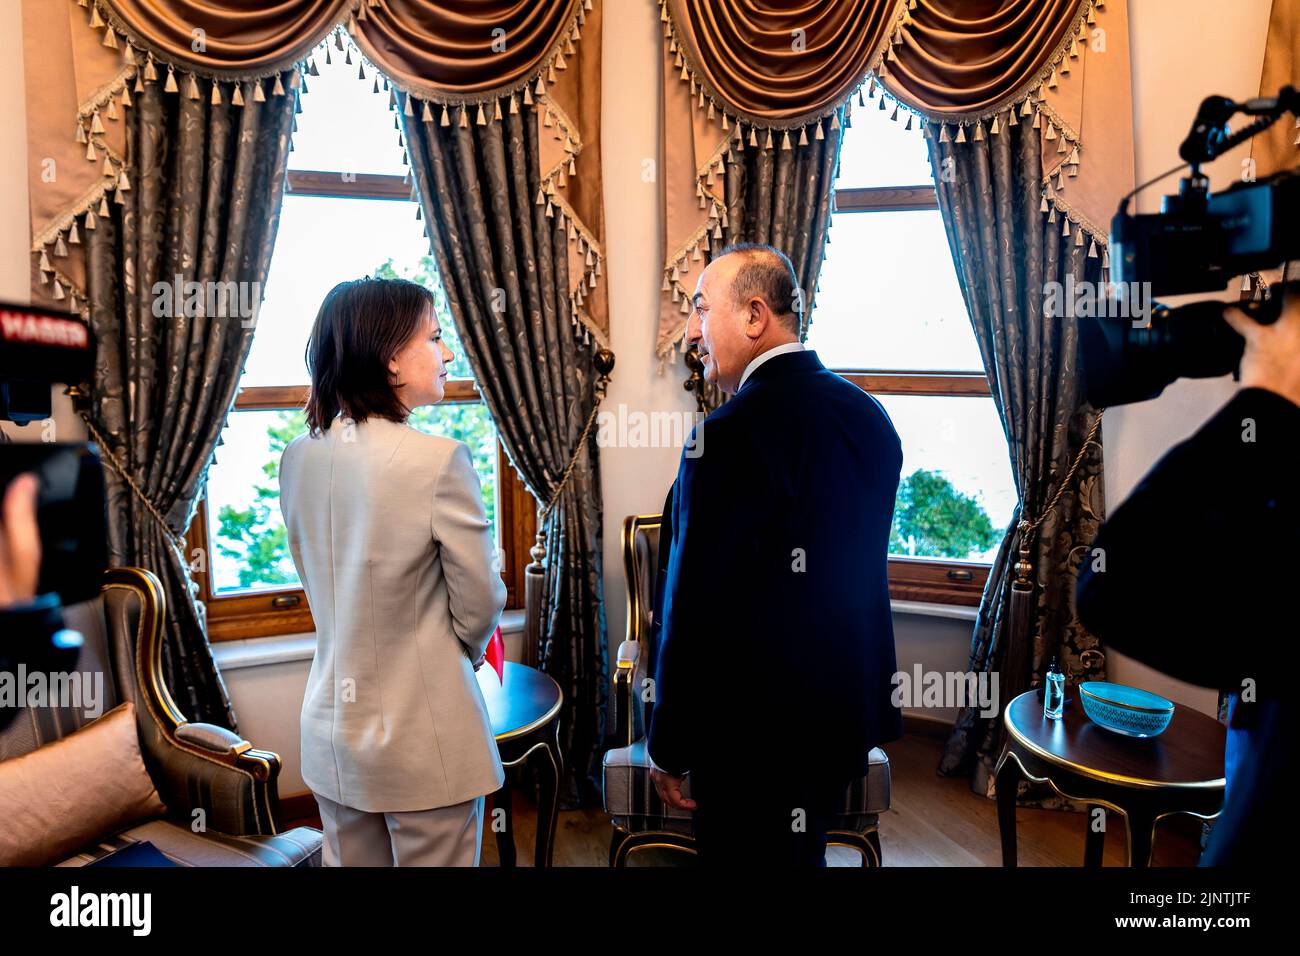 Federal Foreign Minister Annalena Baerbock in talks with Turkey's Foreign Minister Mevluet Cavusoglu in Istanbul, July 29, 2022. Copyright: Leon Kuegeler/photothek.de Stock Photo